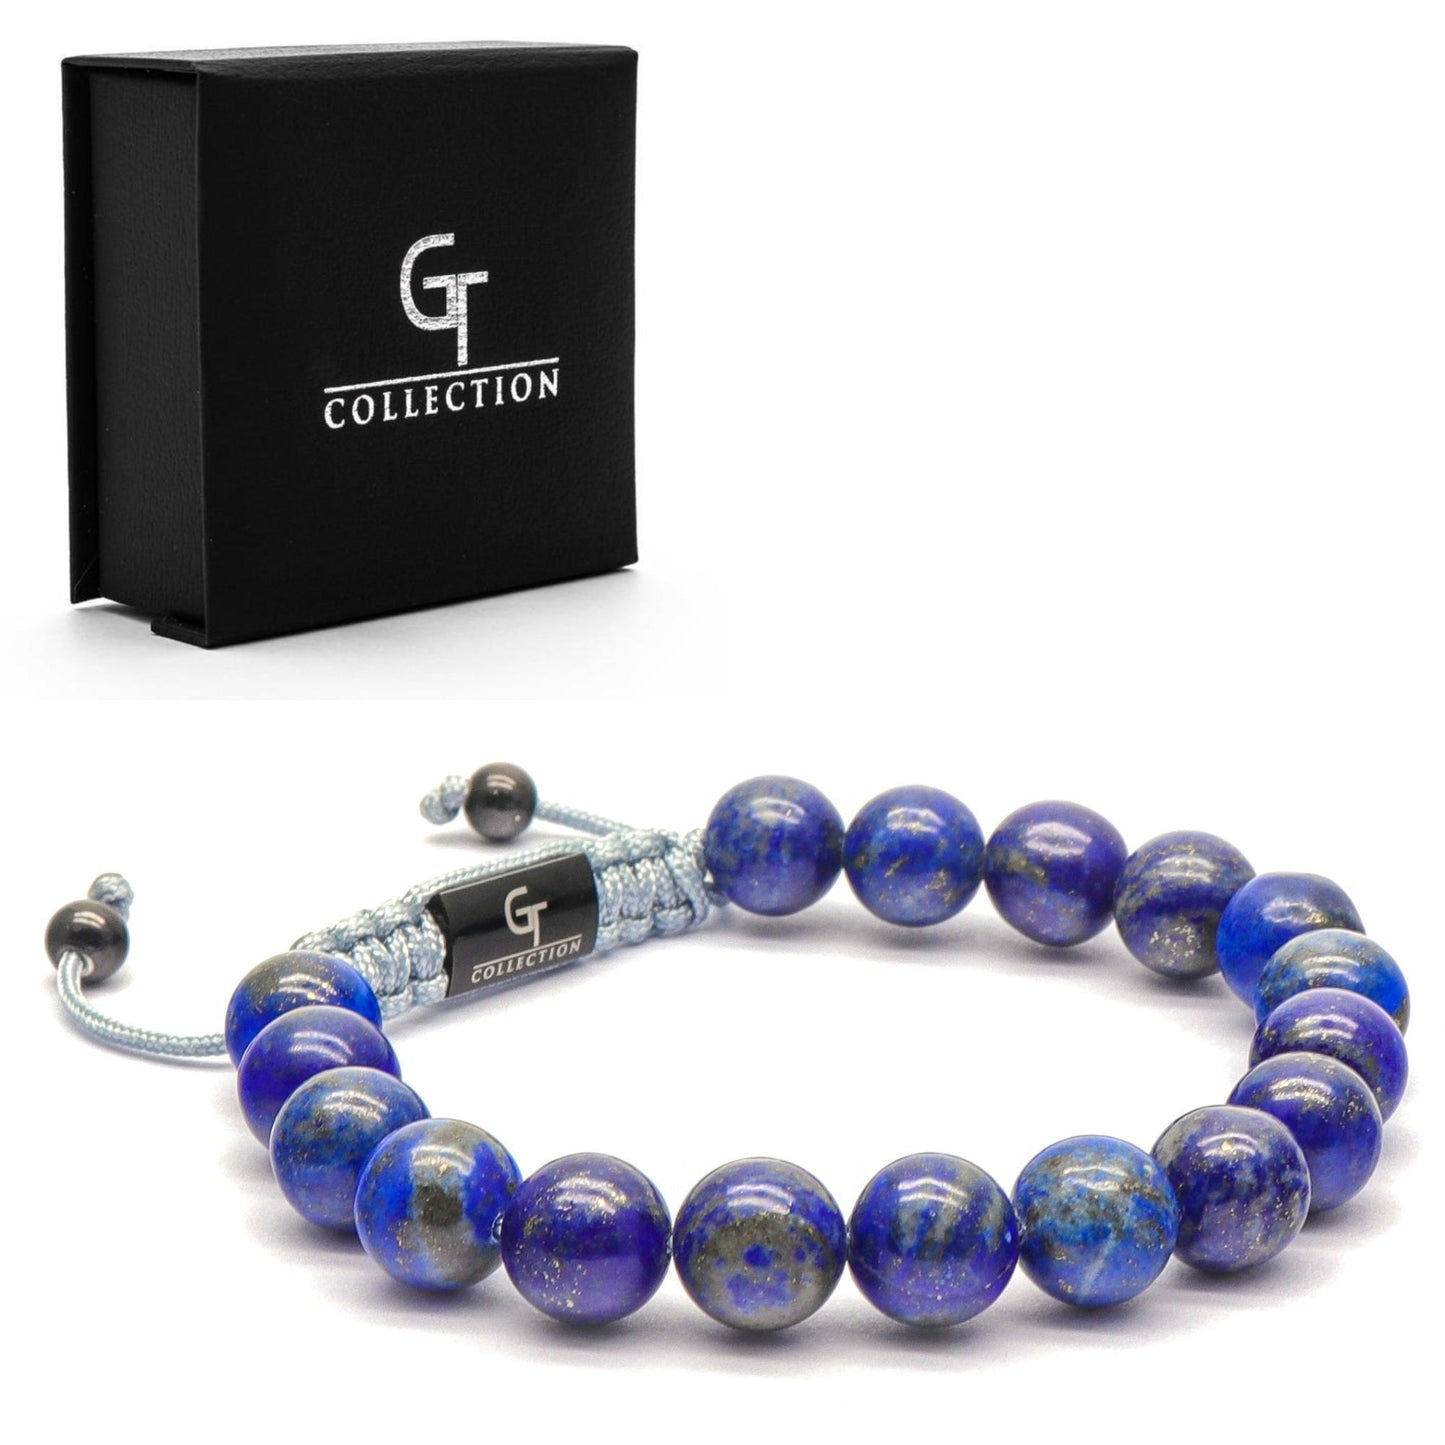 Bracelet - Men's LAPIS LAZULI Beaded Bracelet - Blue Stones